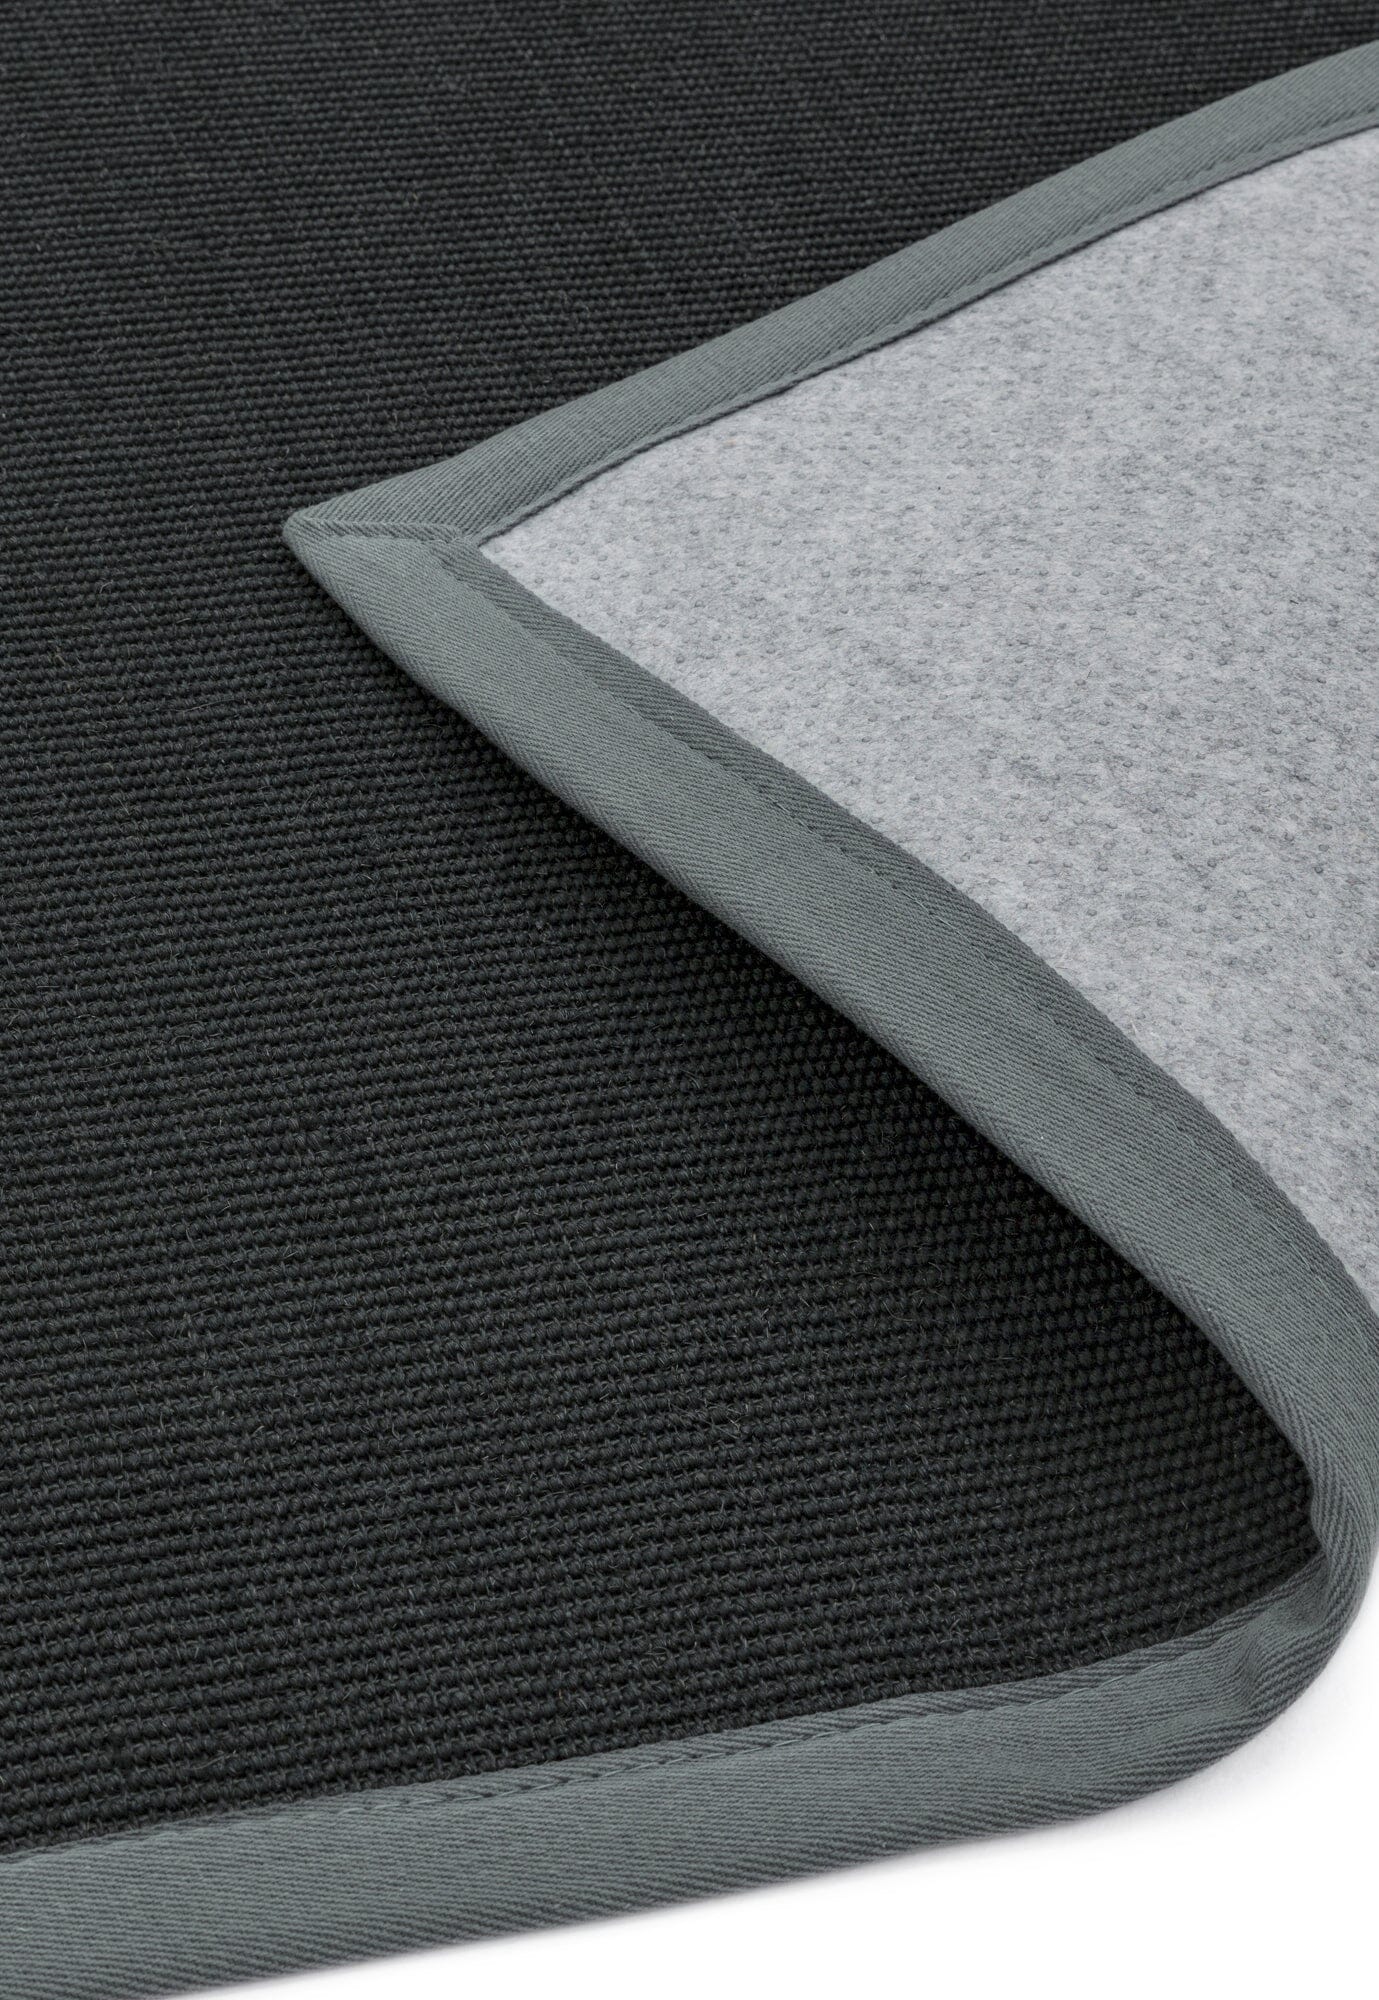  Asiatic Carpets-Asiatic Carpets Sisal Machine Woven Rug Black/Grey - 240 x 340cm-Black 381 